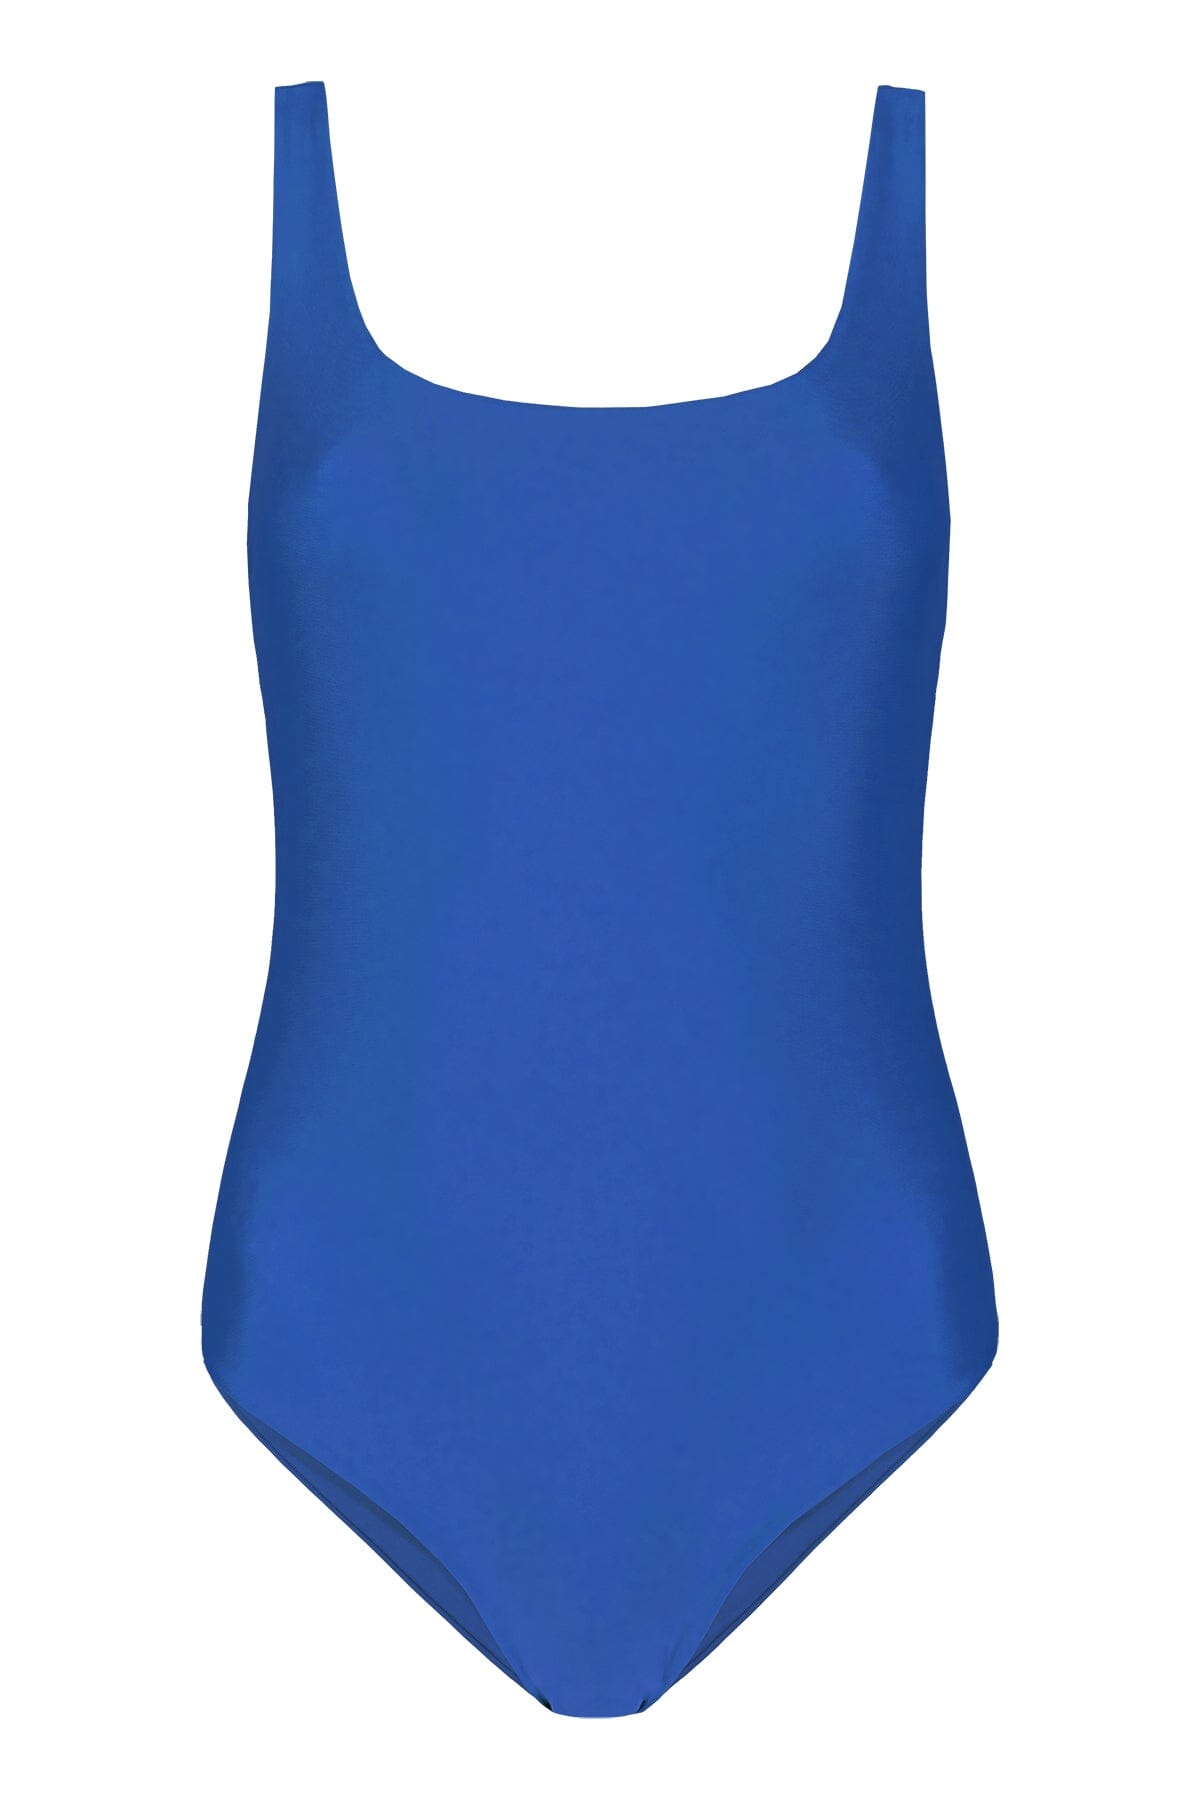 Lilja the Label - Mar Onepiece - Recycled PA - Weekendbee - sustainable sportswear